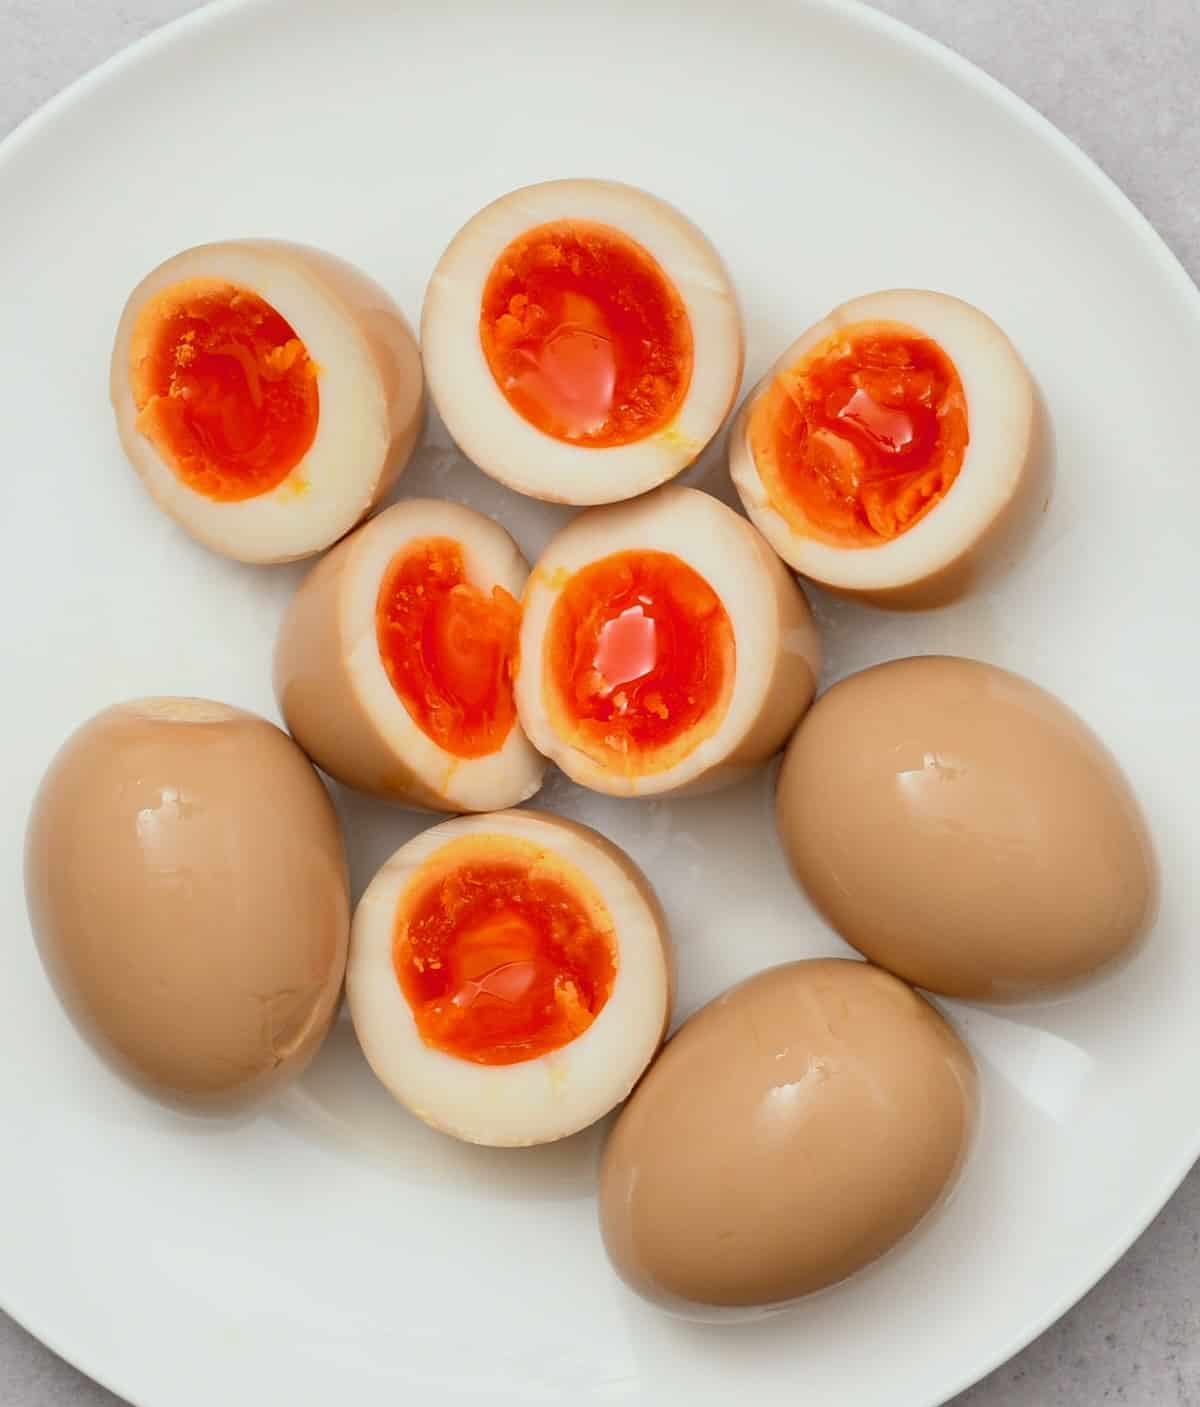 Six ramen eggs, three of which are cut in half